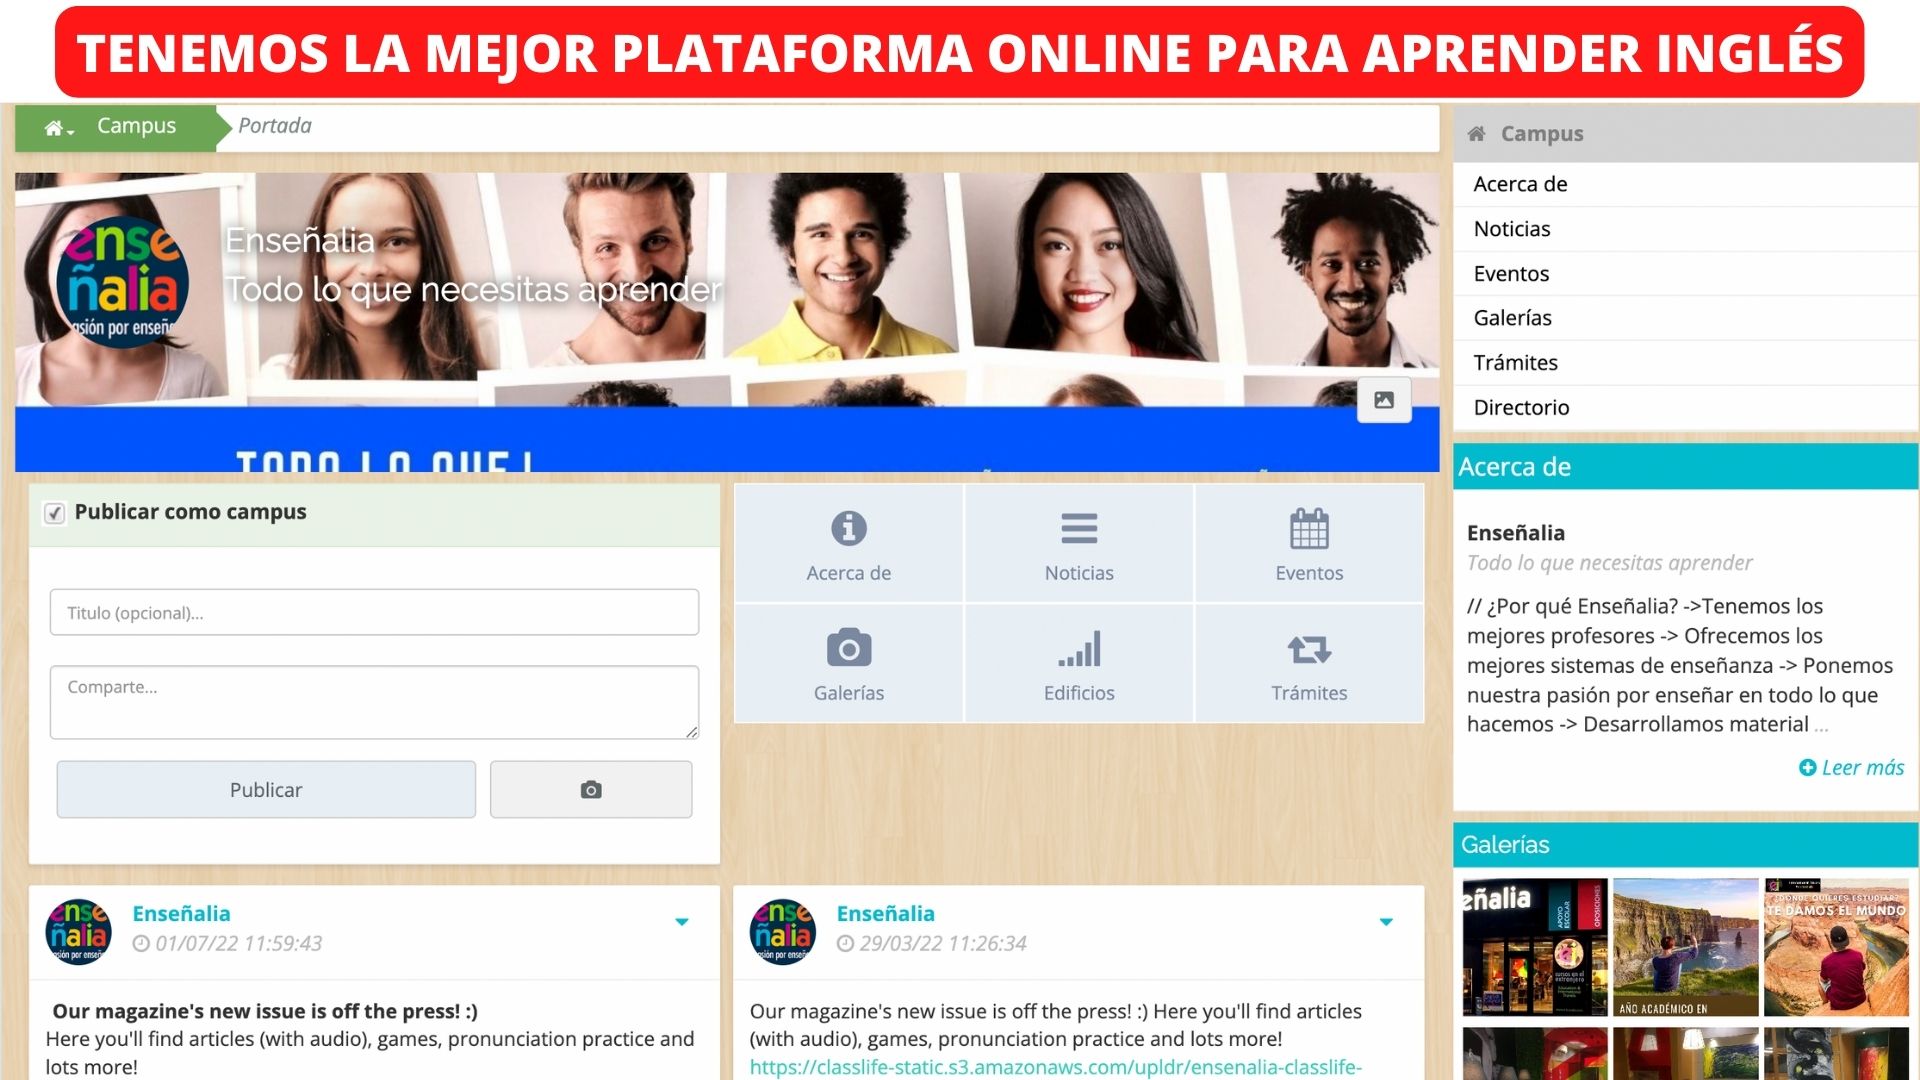 Plataforma online para aprender inglés